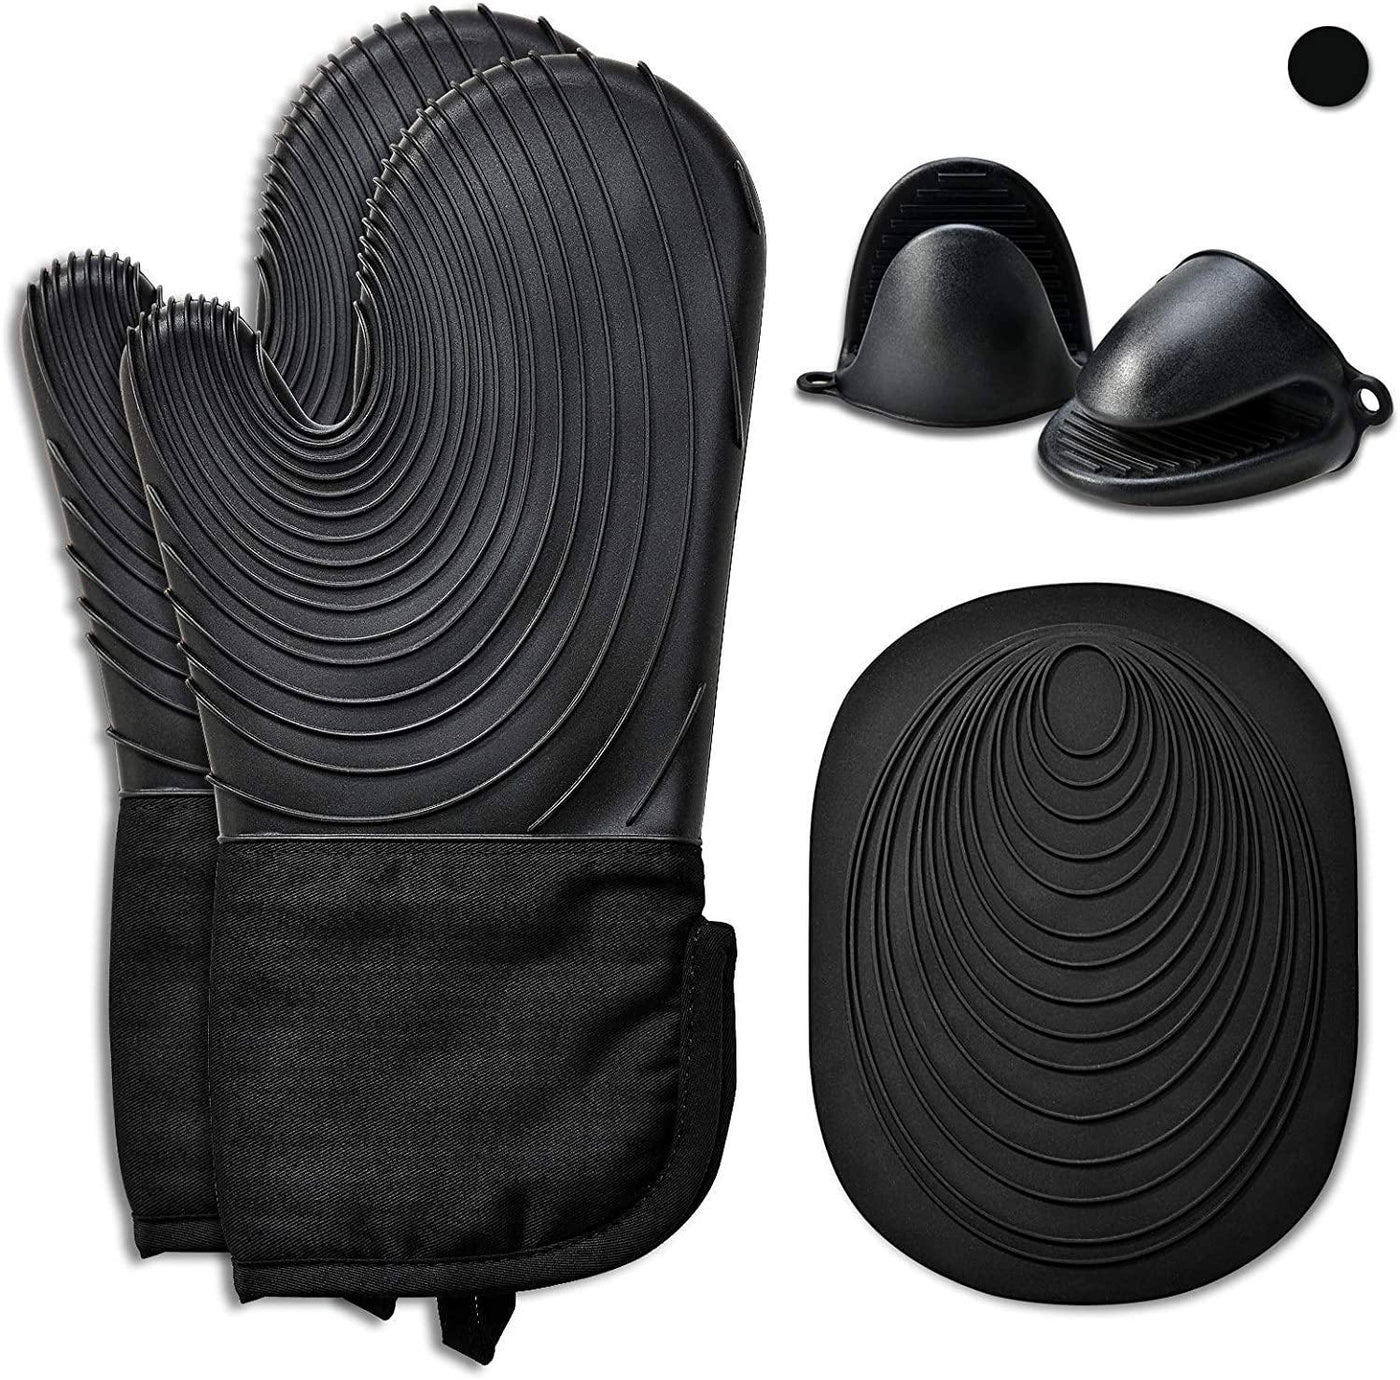 EUNA Heat Resistant Oven Glove Set Black - EUNA